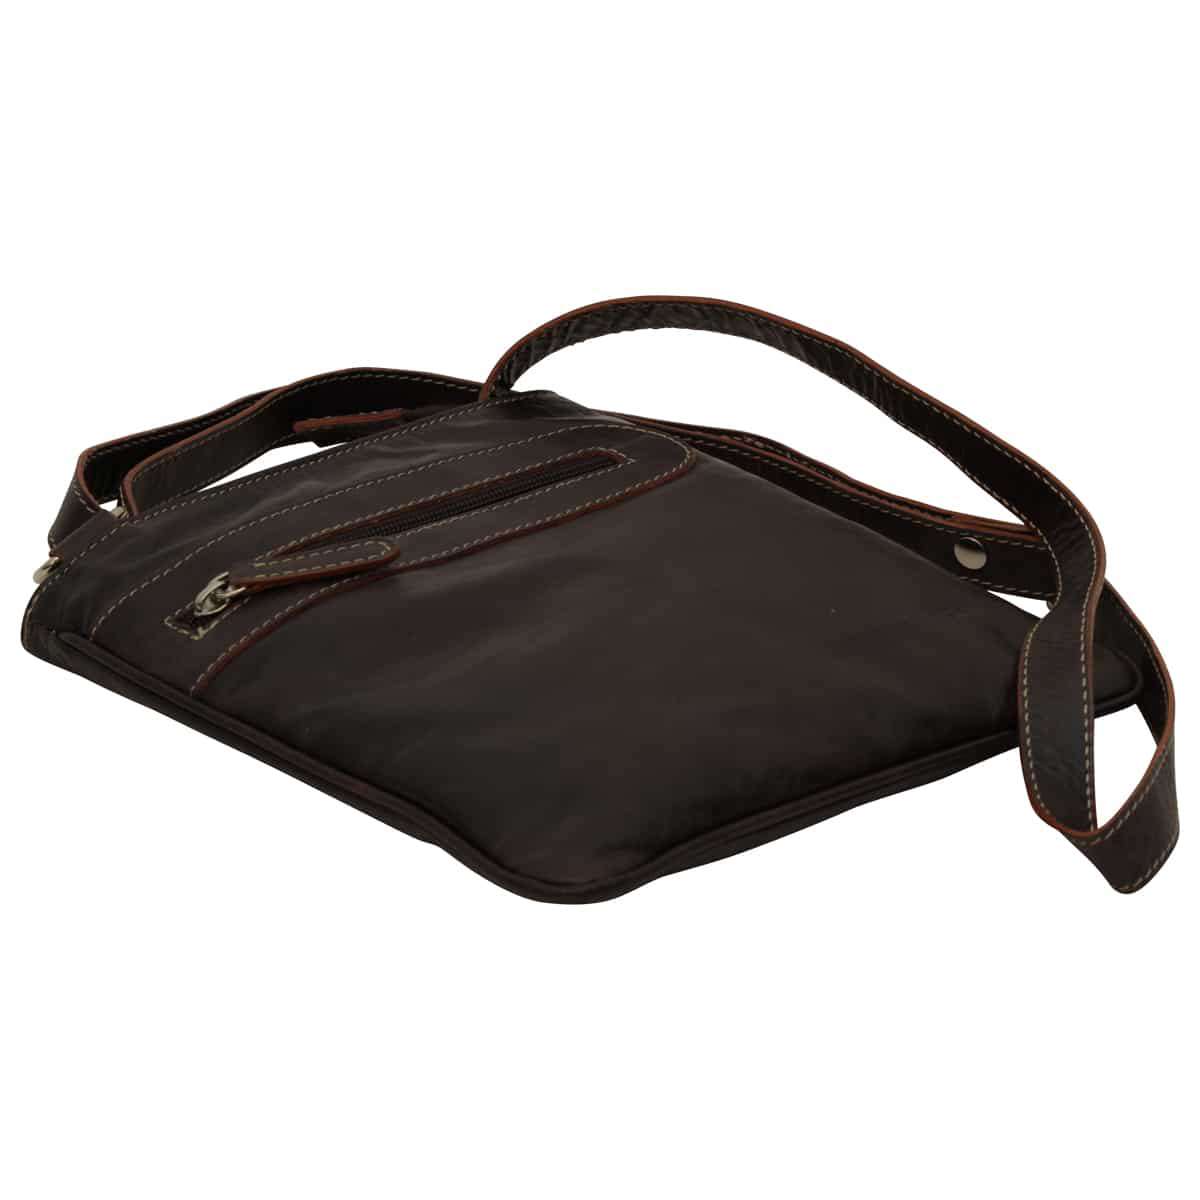 Leather cross body bag with zip pocket - Dark Brown | 086161TM | EURO | Old Angler Firenze